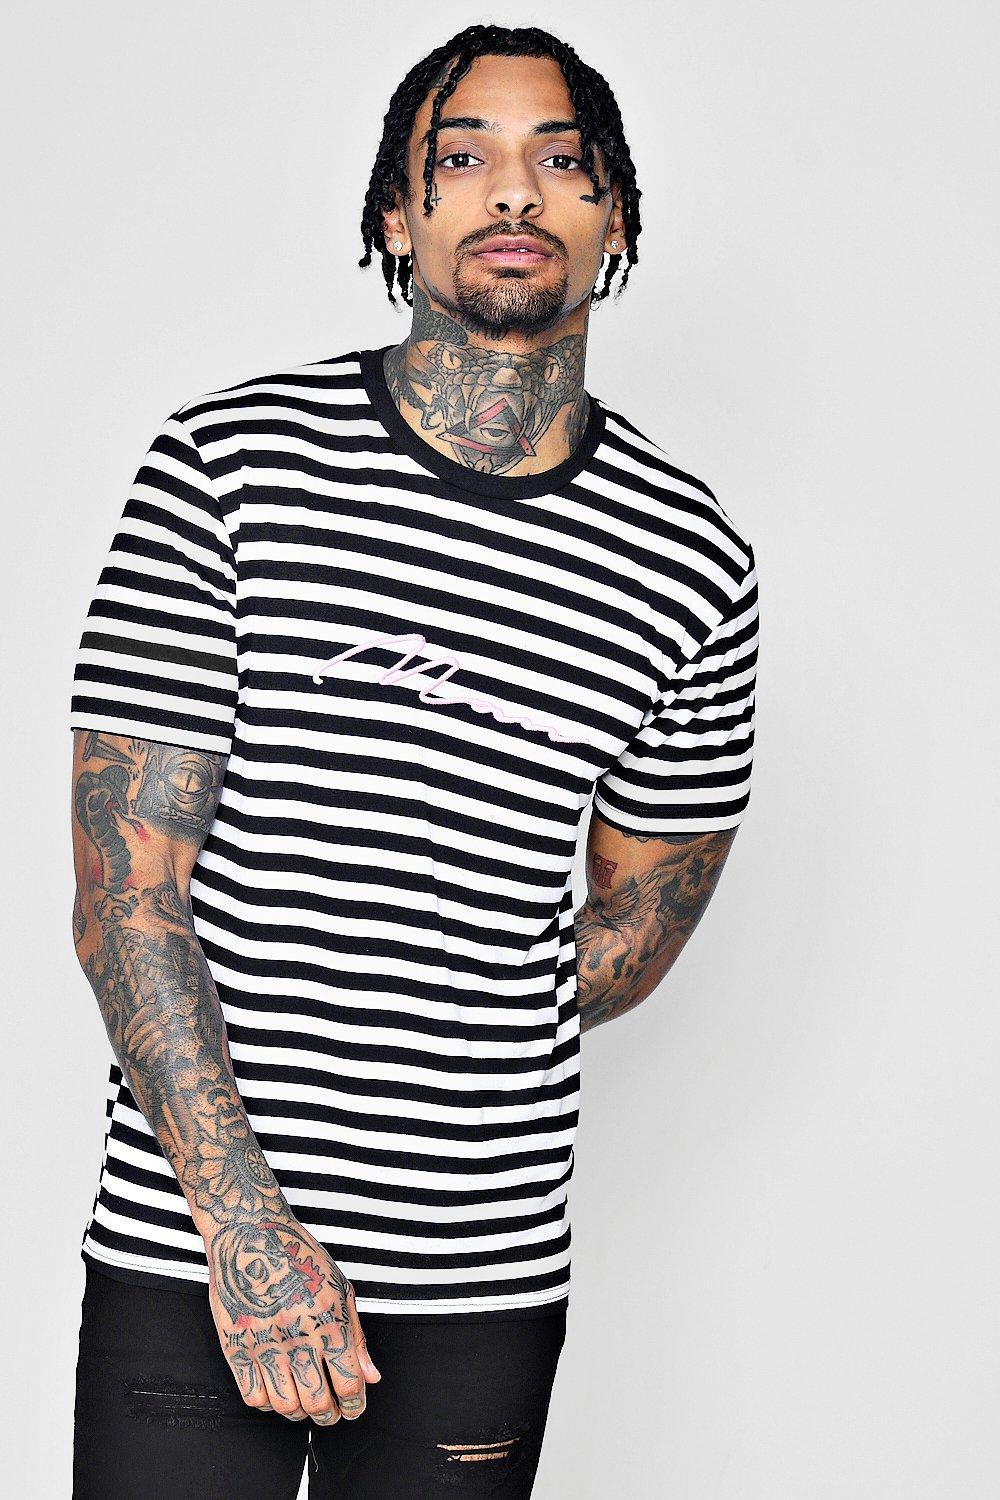 cool striped shirts